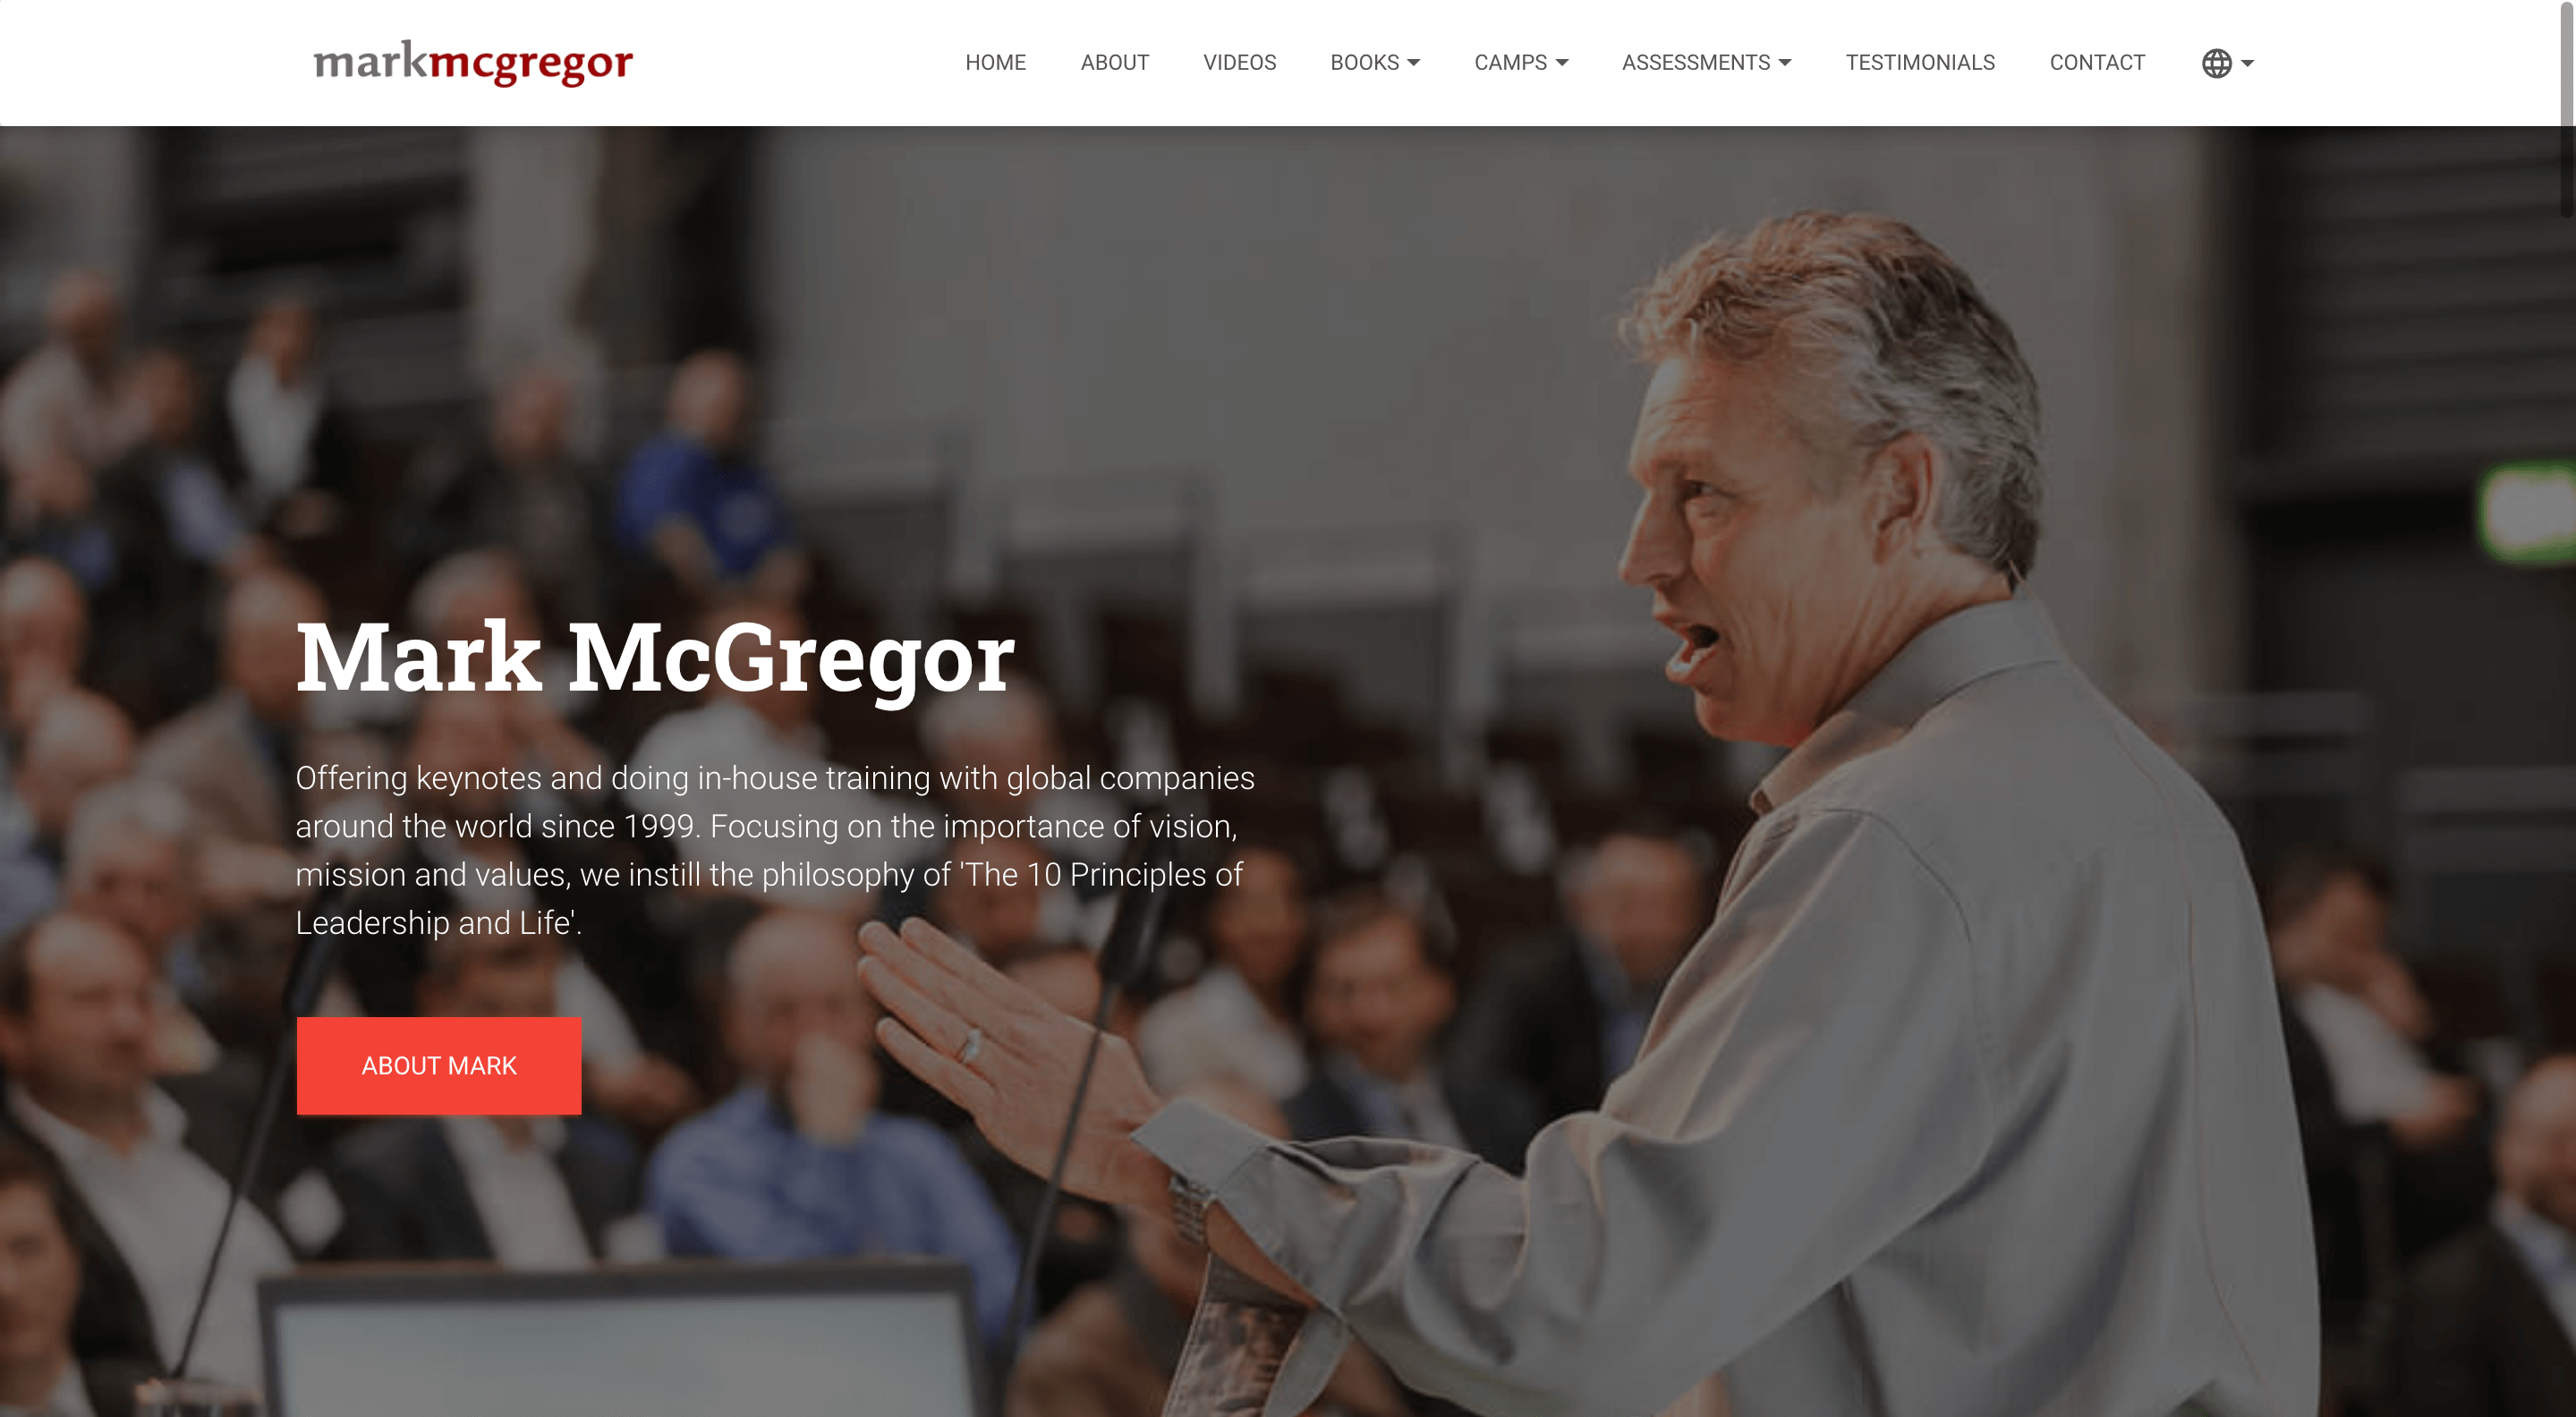 Mark McGregor home page